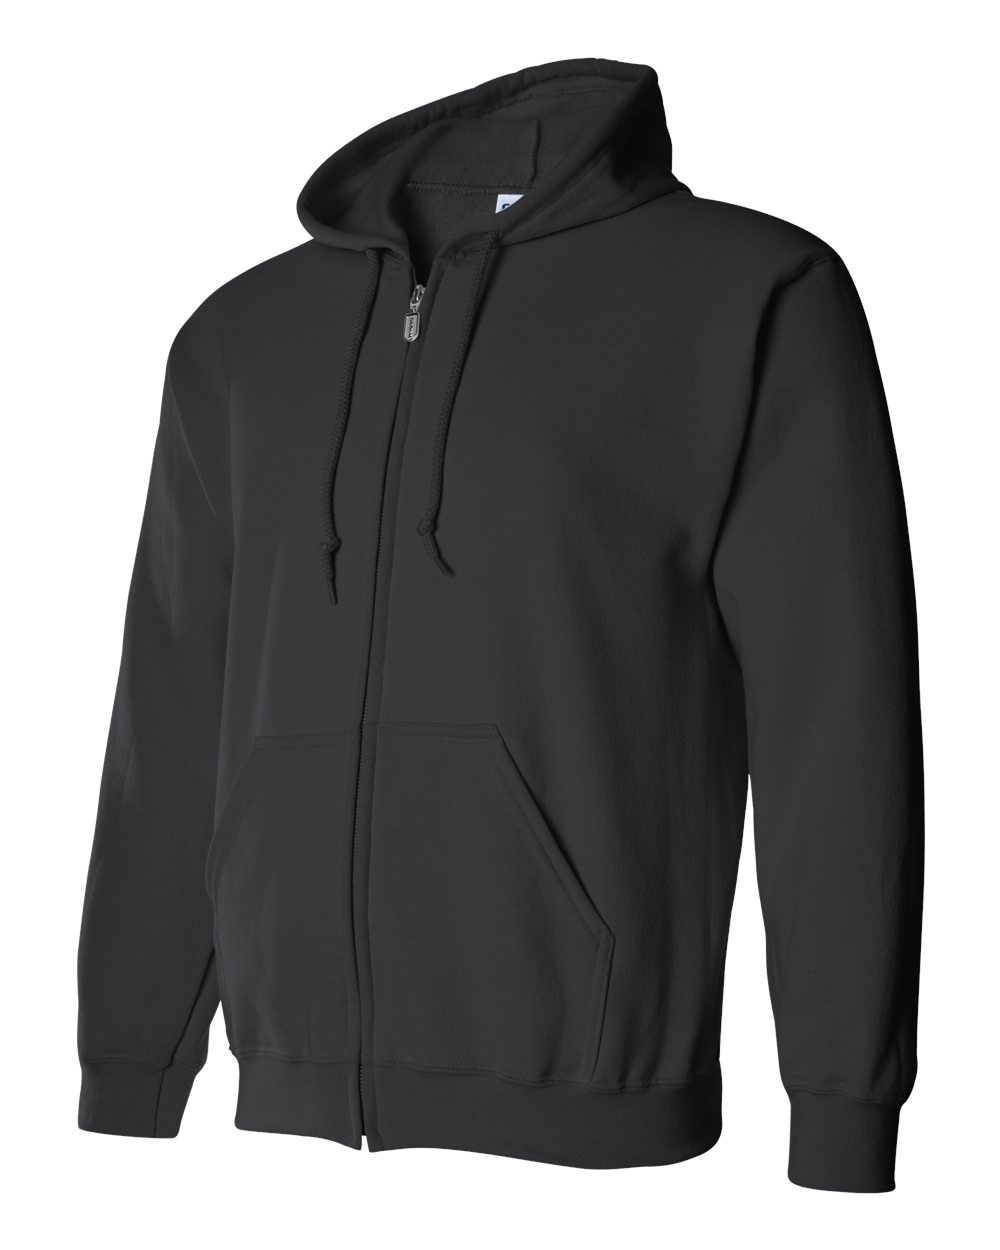 Unisex Adult Zip-up Hooded Sweatshirt | T-Shirt Time